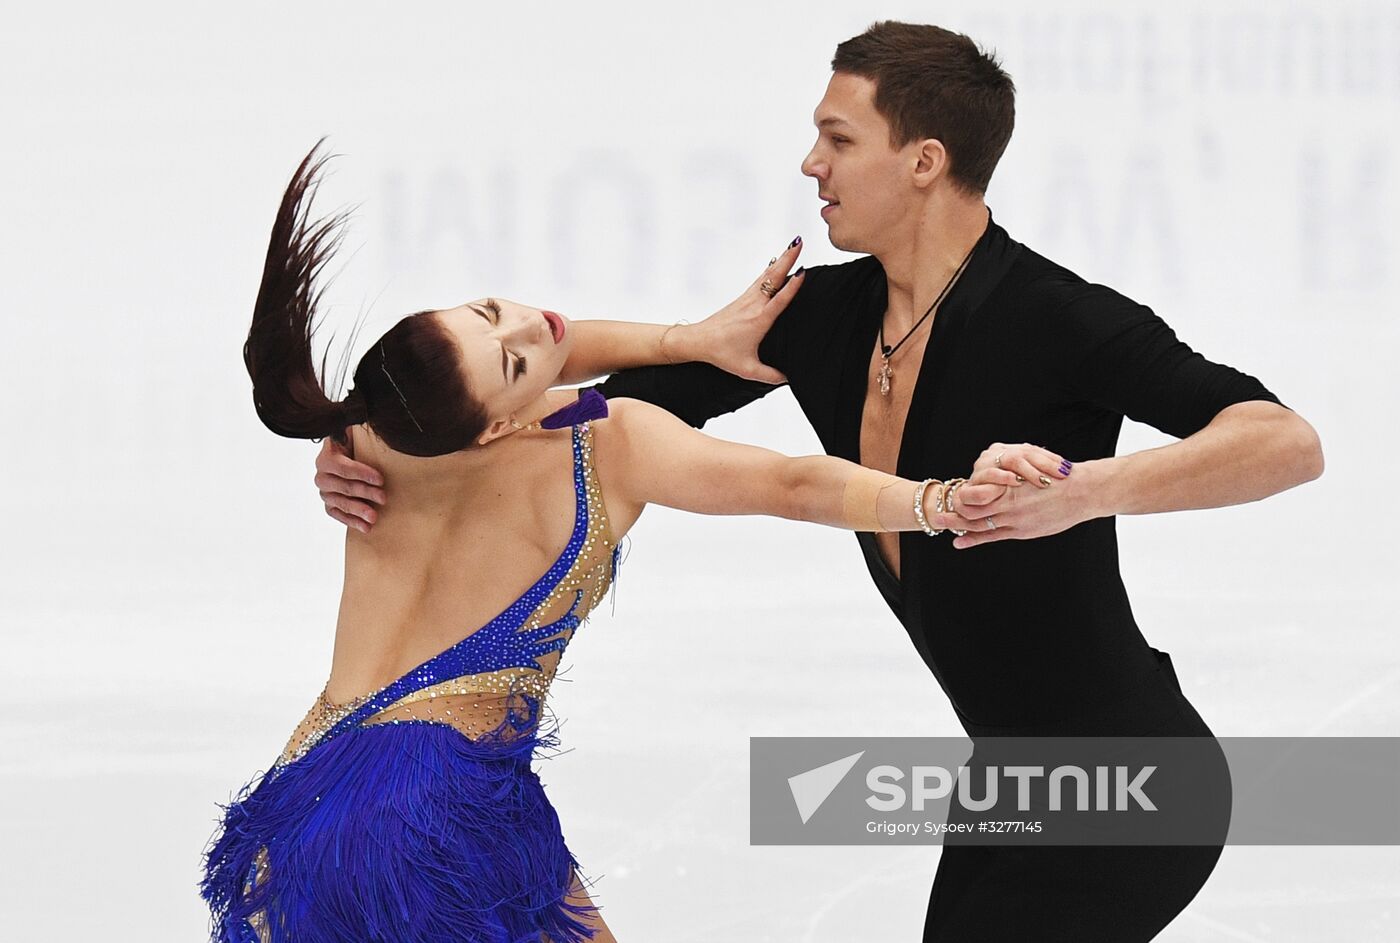 European Figure Skating Championships. Ice dancing. Short dance